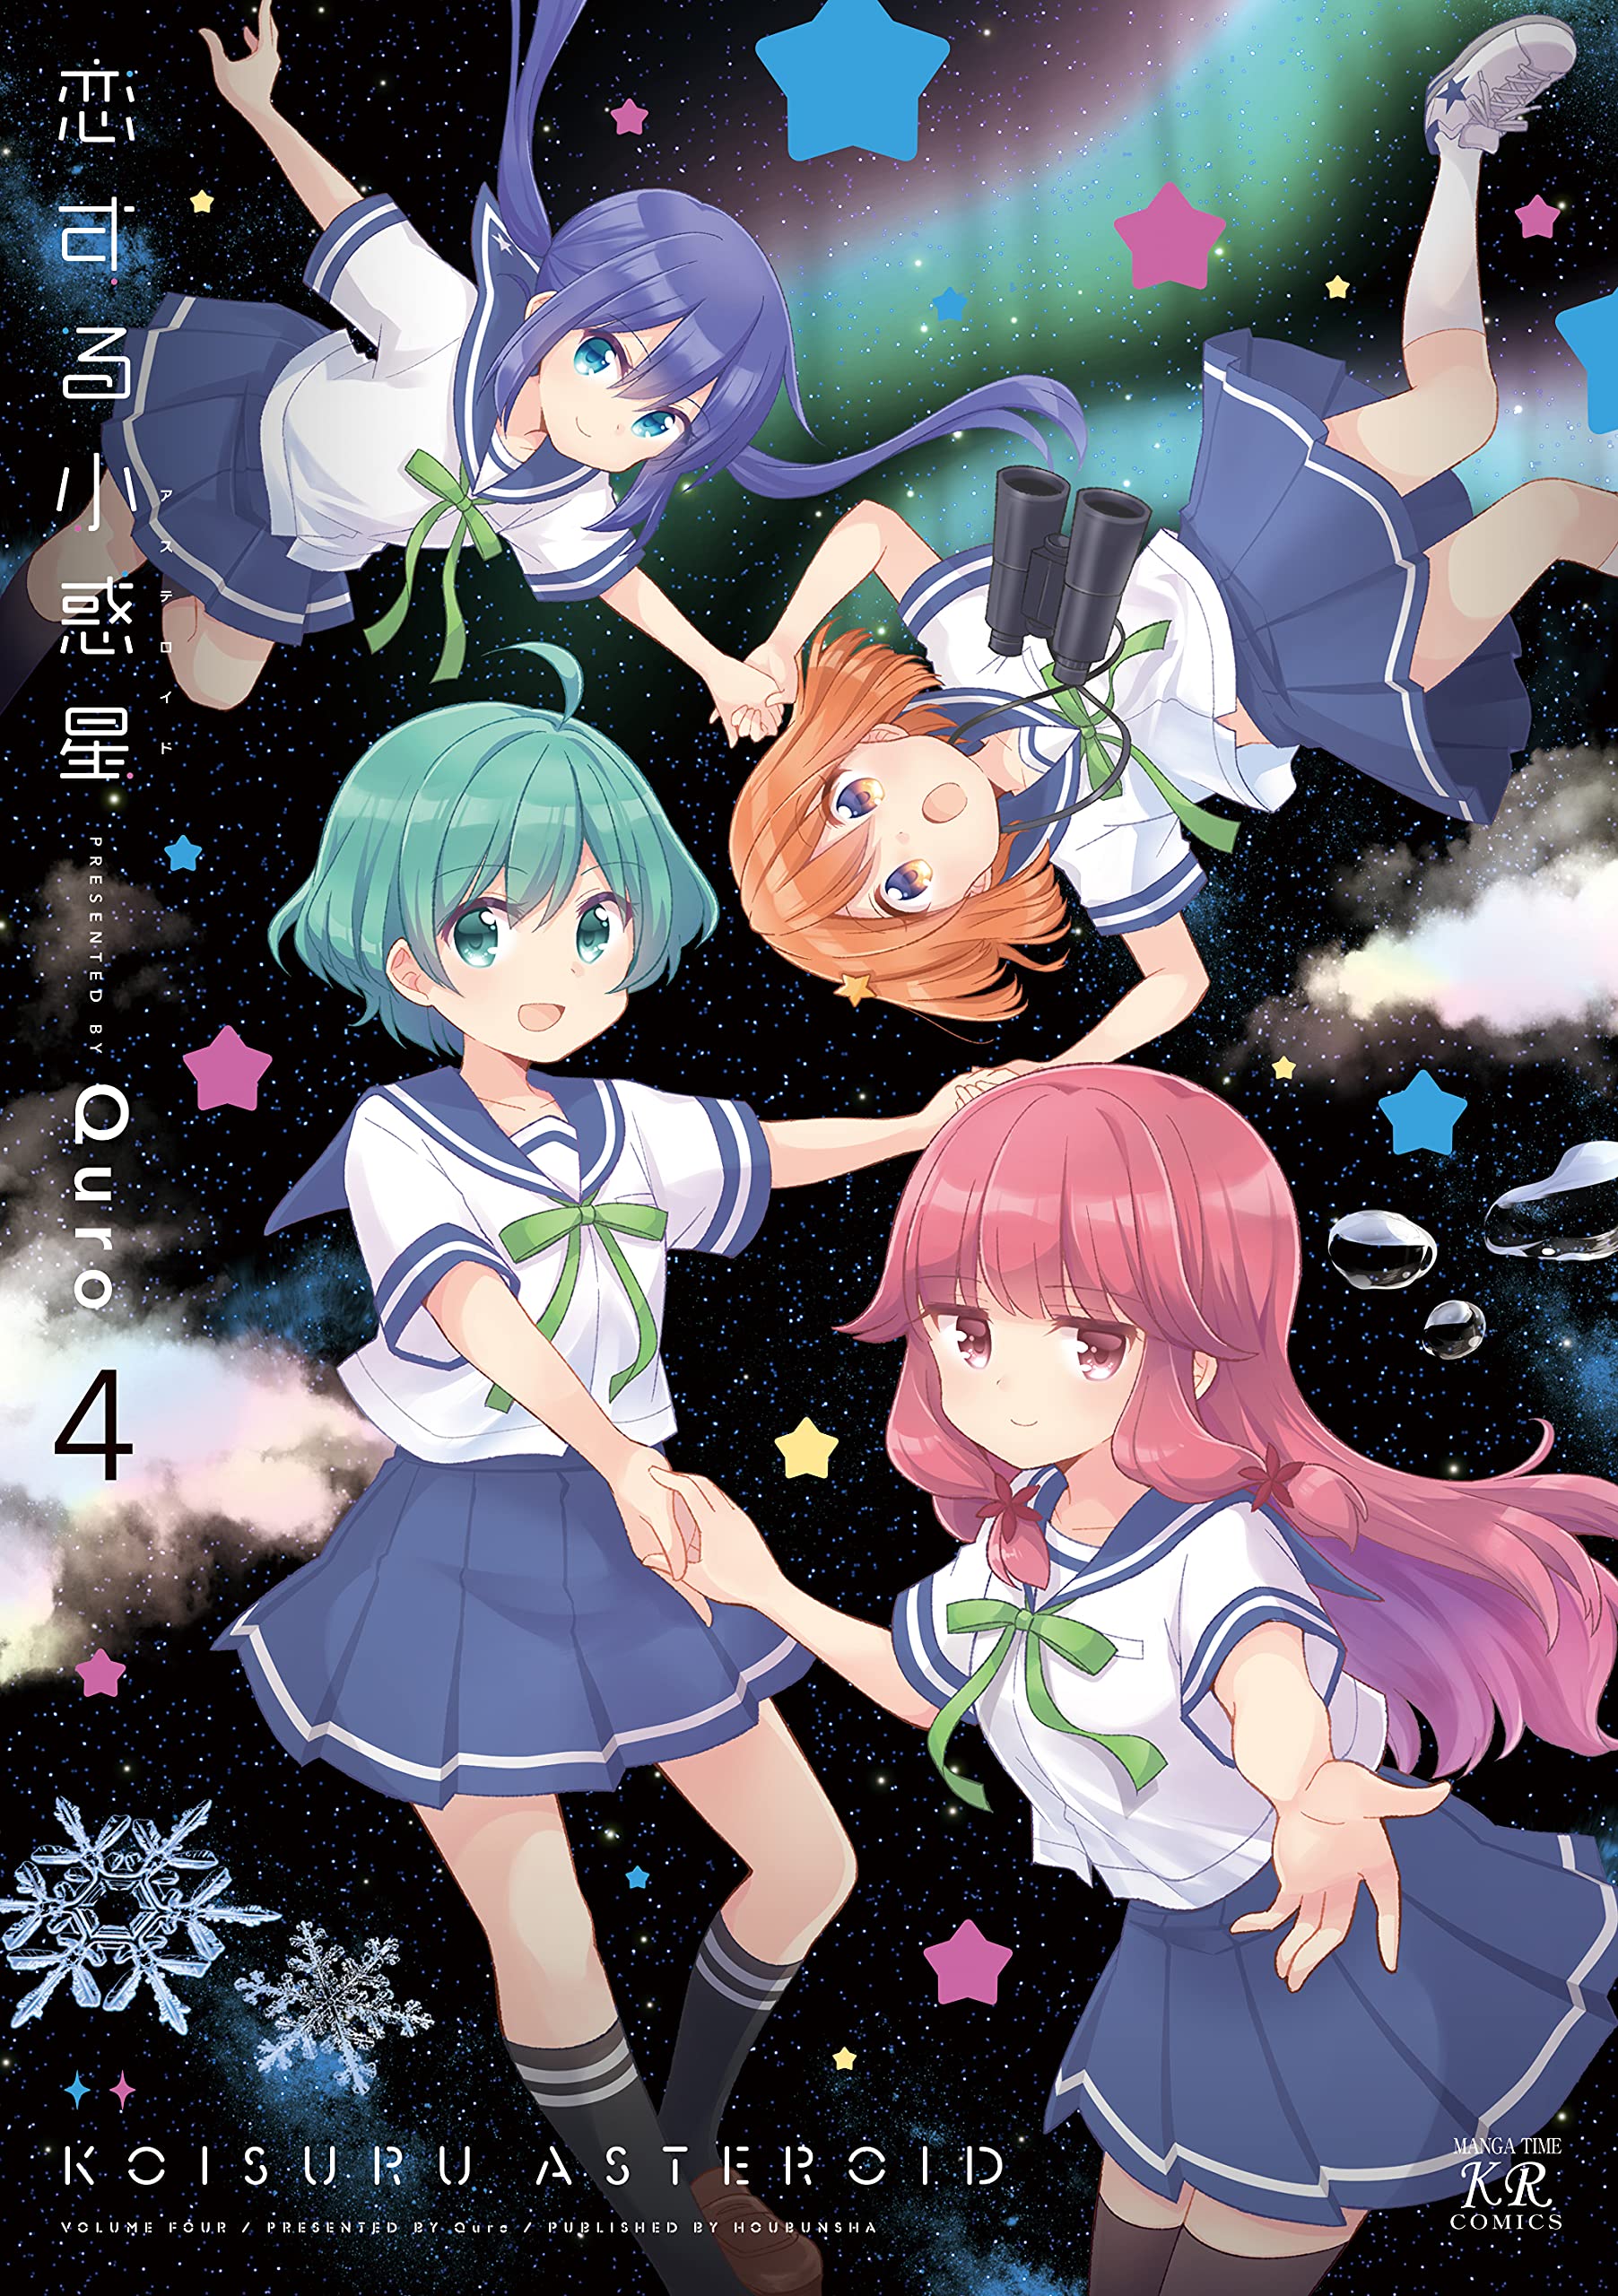 anime: Koisuru Asteroid #koisuruasteroid #anime #recomendaçãodeanime #